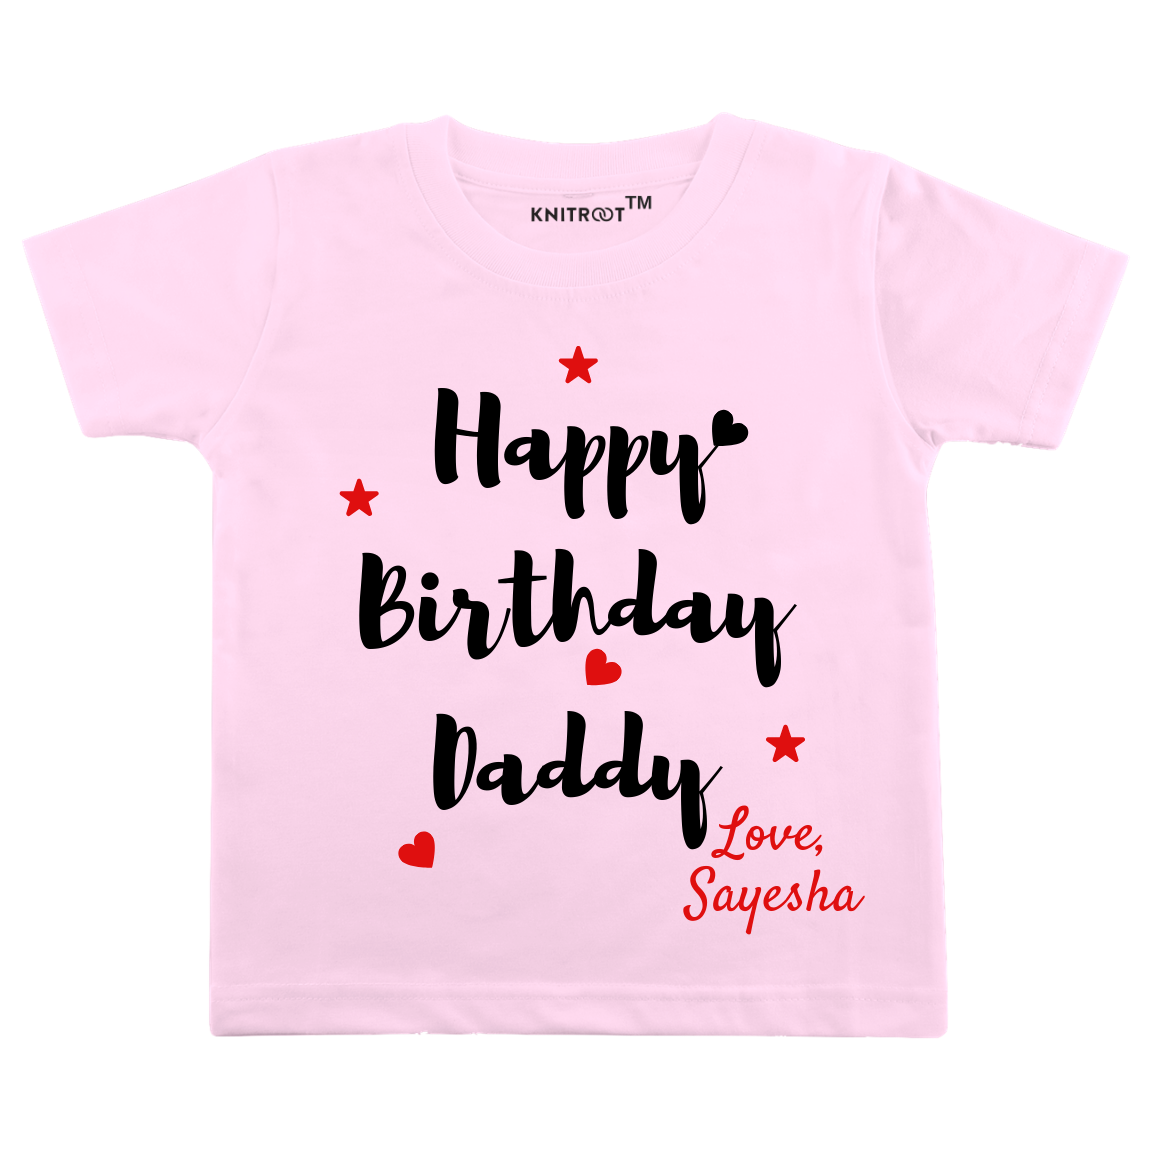 Happy Birthday Daddy Tee